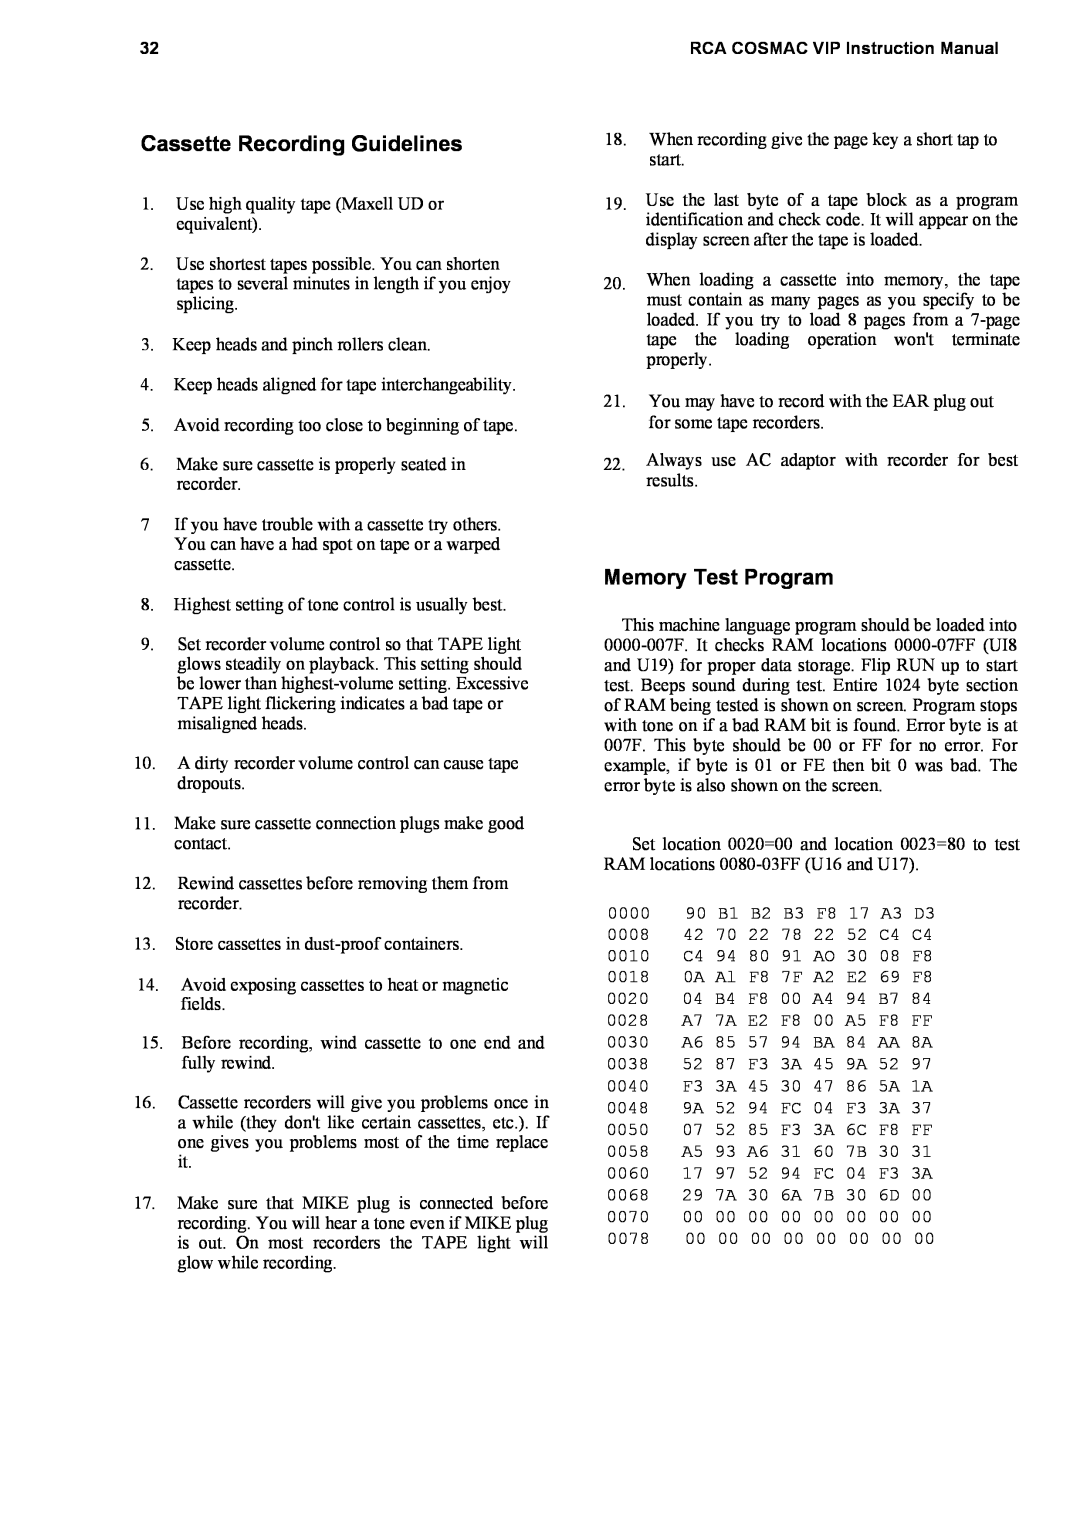 RCA CDP18S711 manual Cassette Recording Guidelines, Memory Test Program 